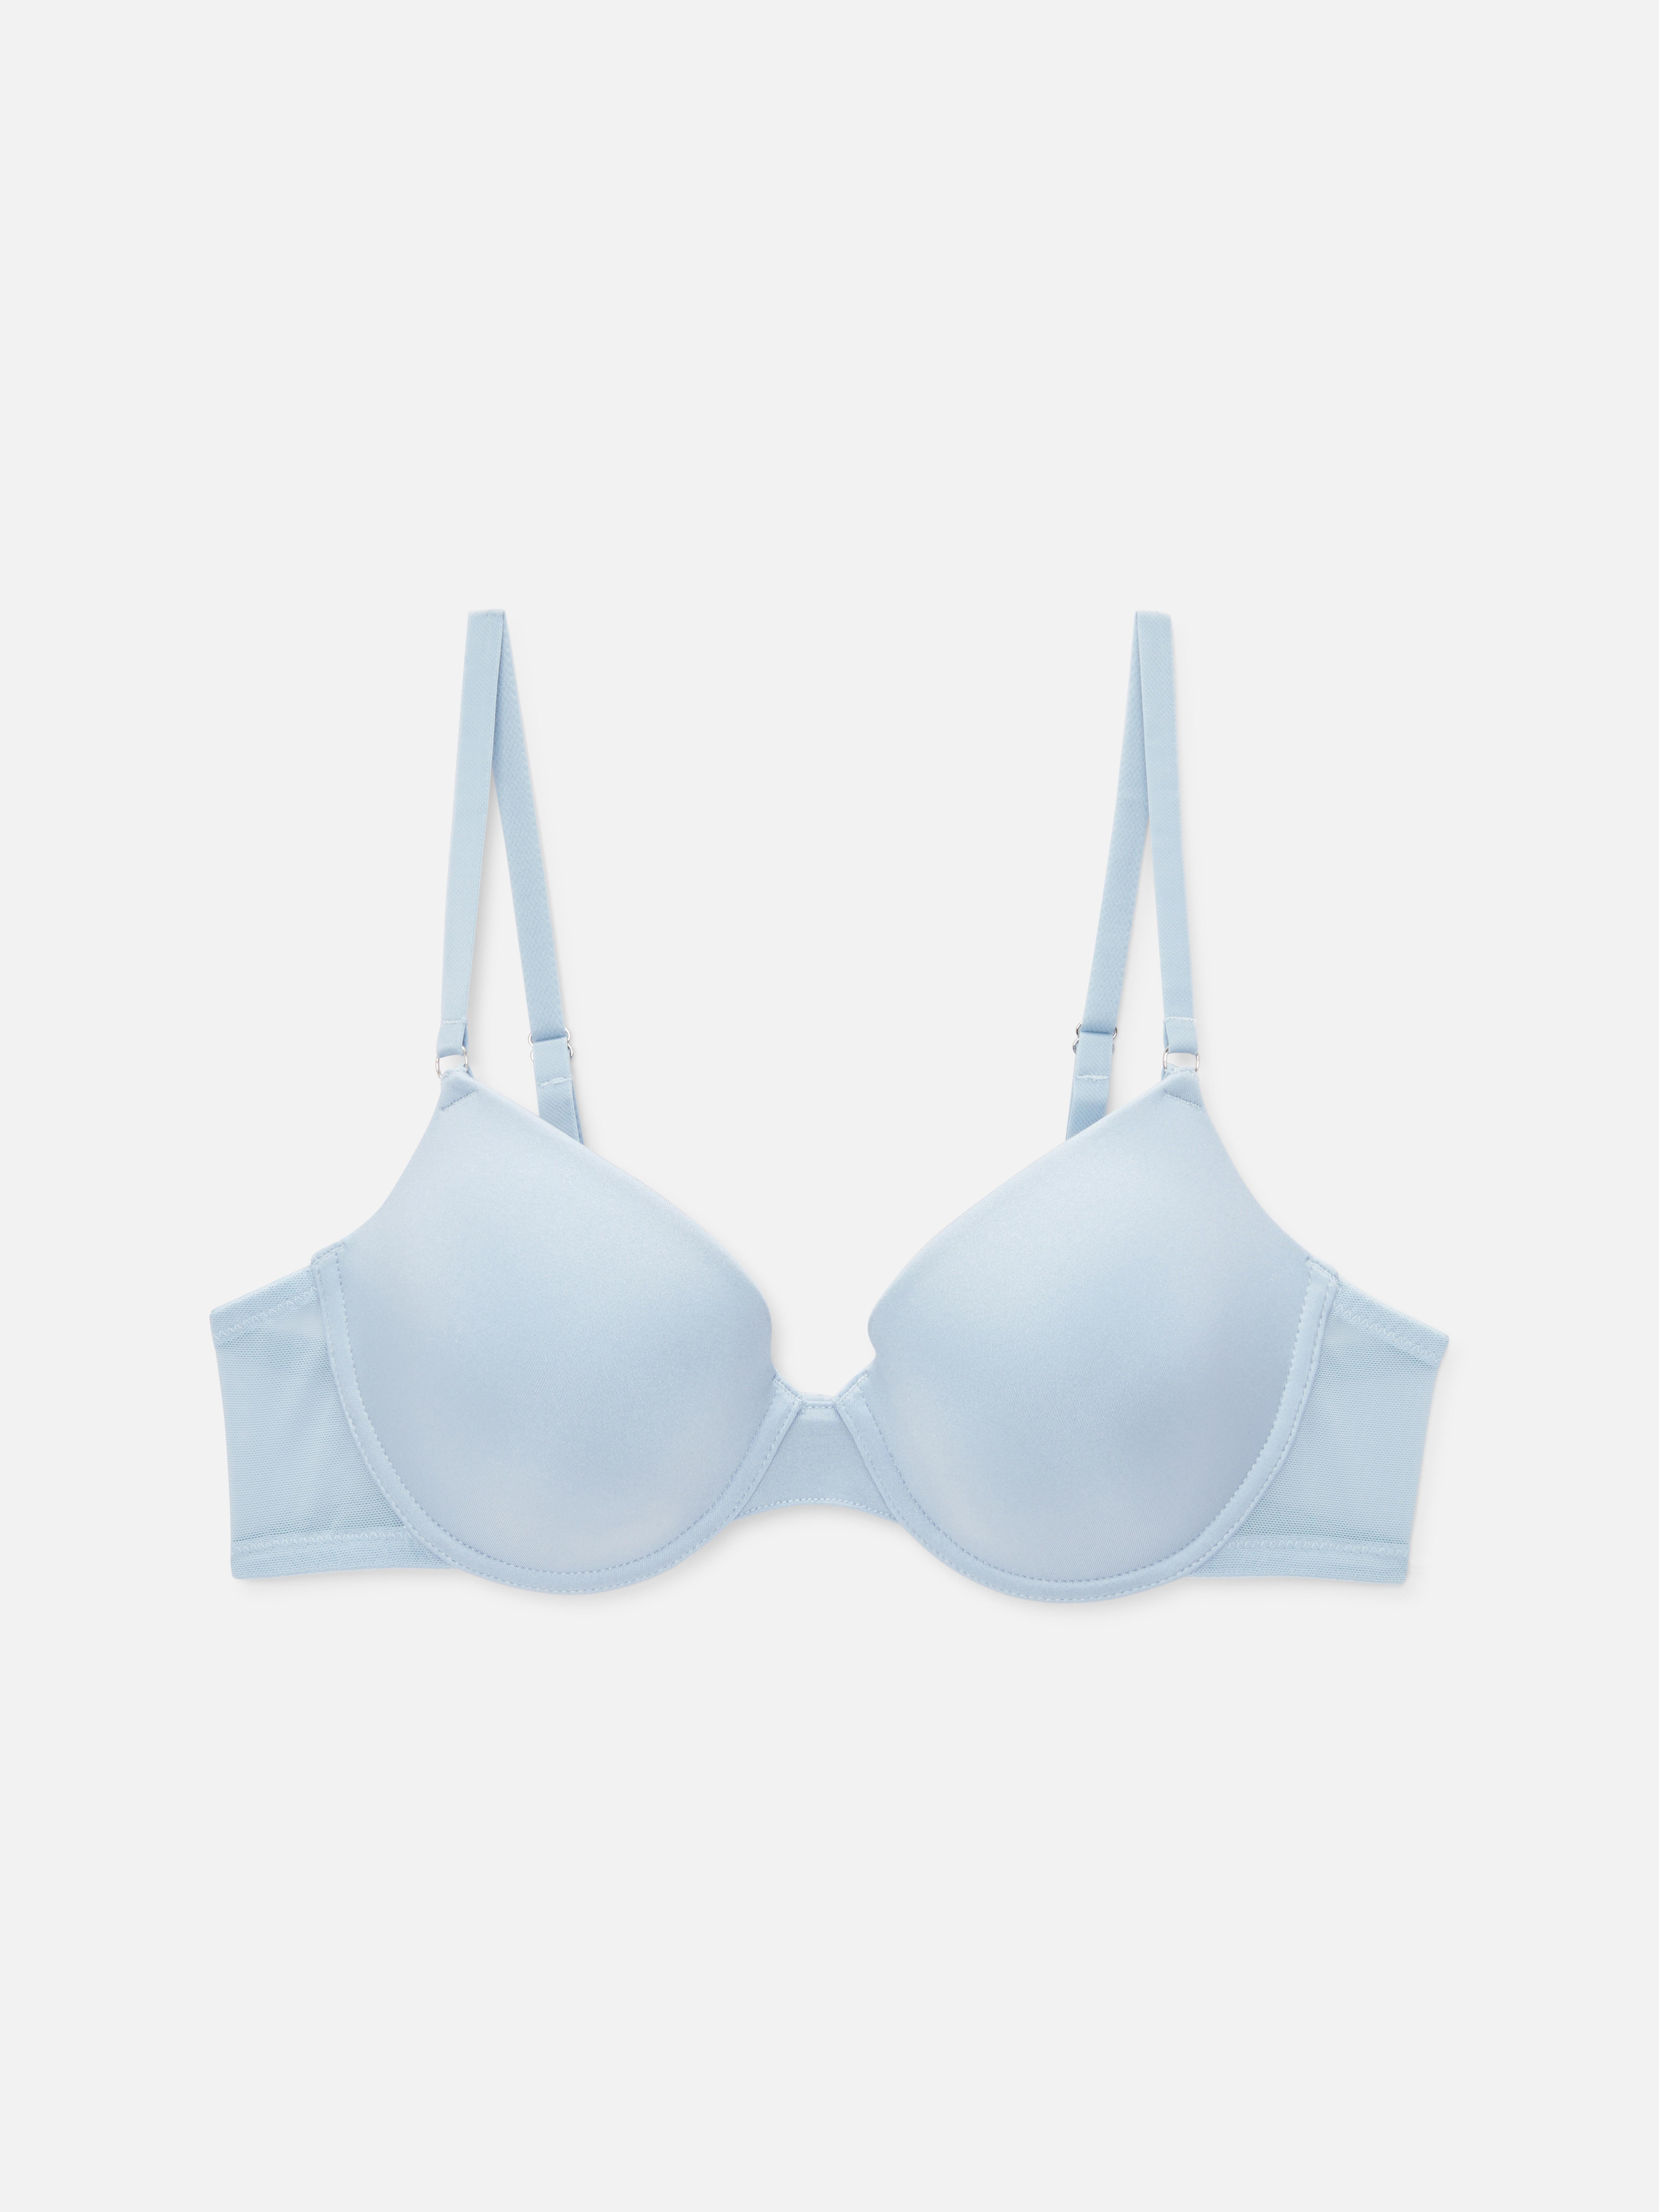 Primark Lingerie, Underwear & Bras January 2020